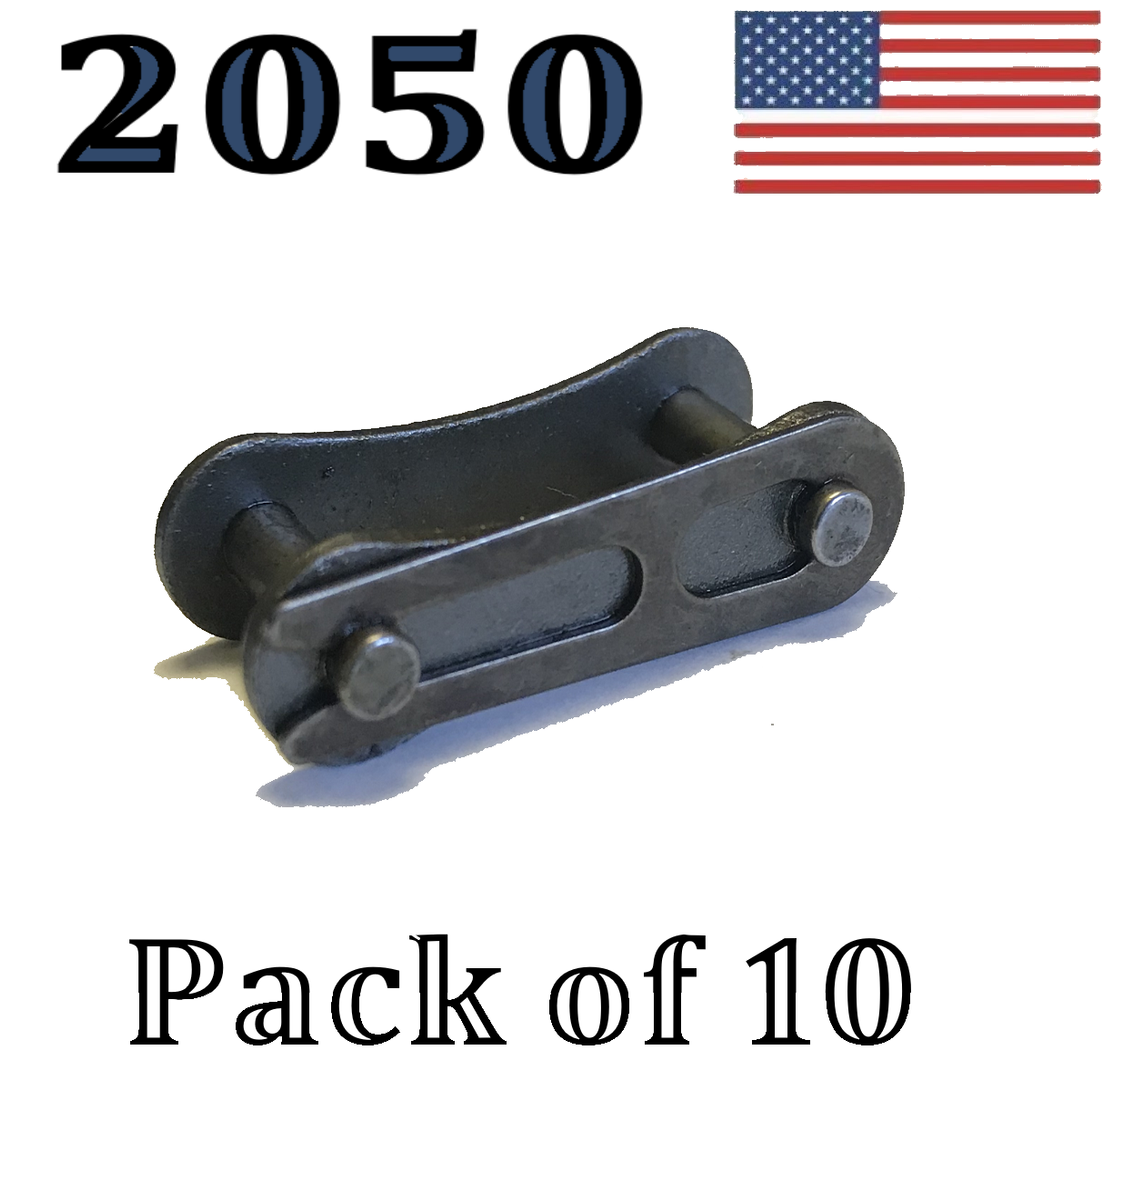 1x C-2050 OL Off Links Half Links Roller Chain Brand New #2050 